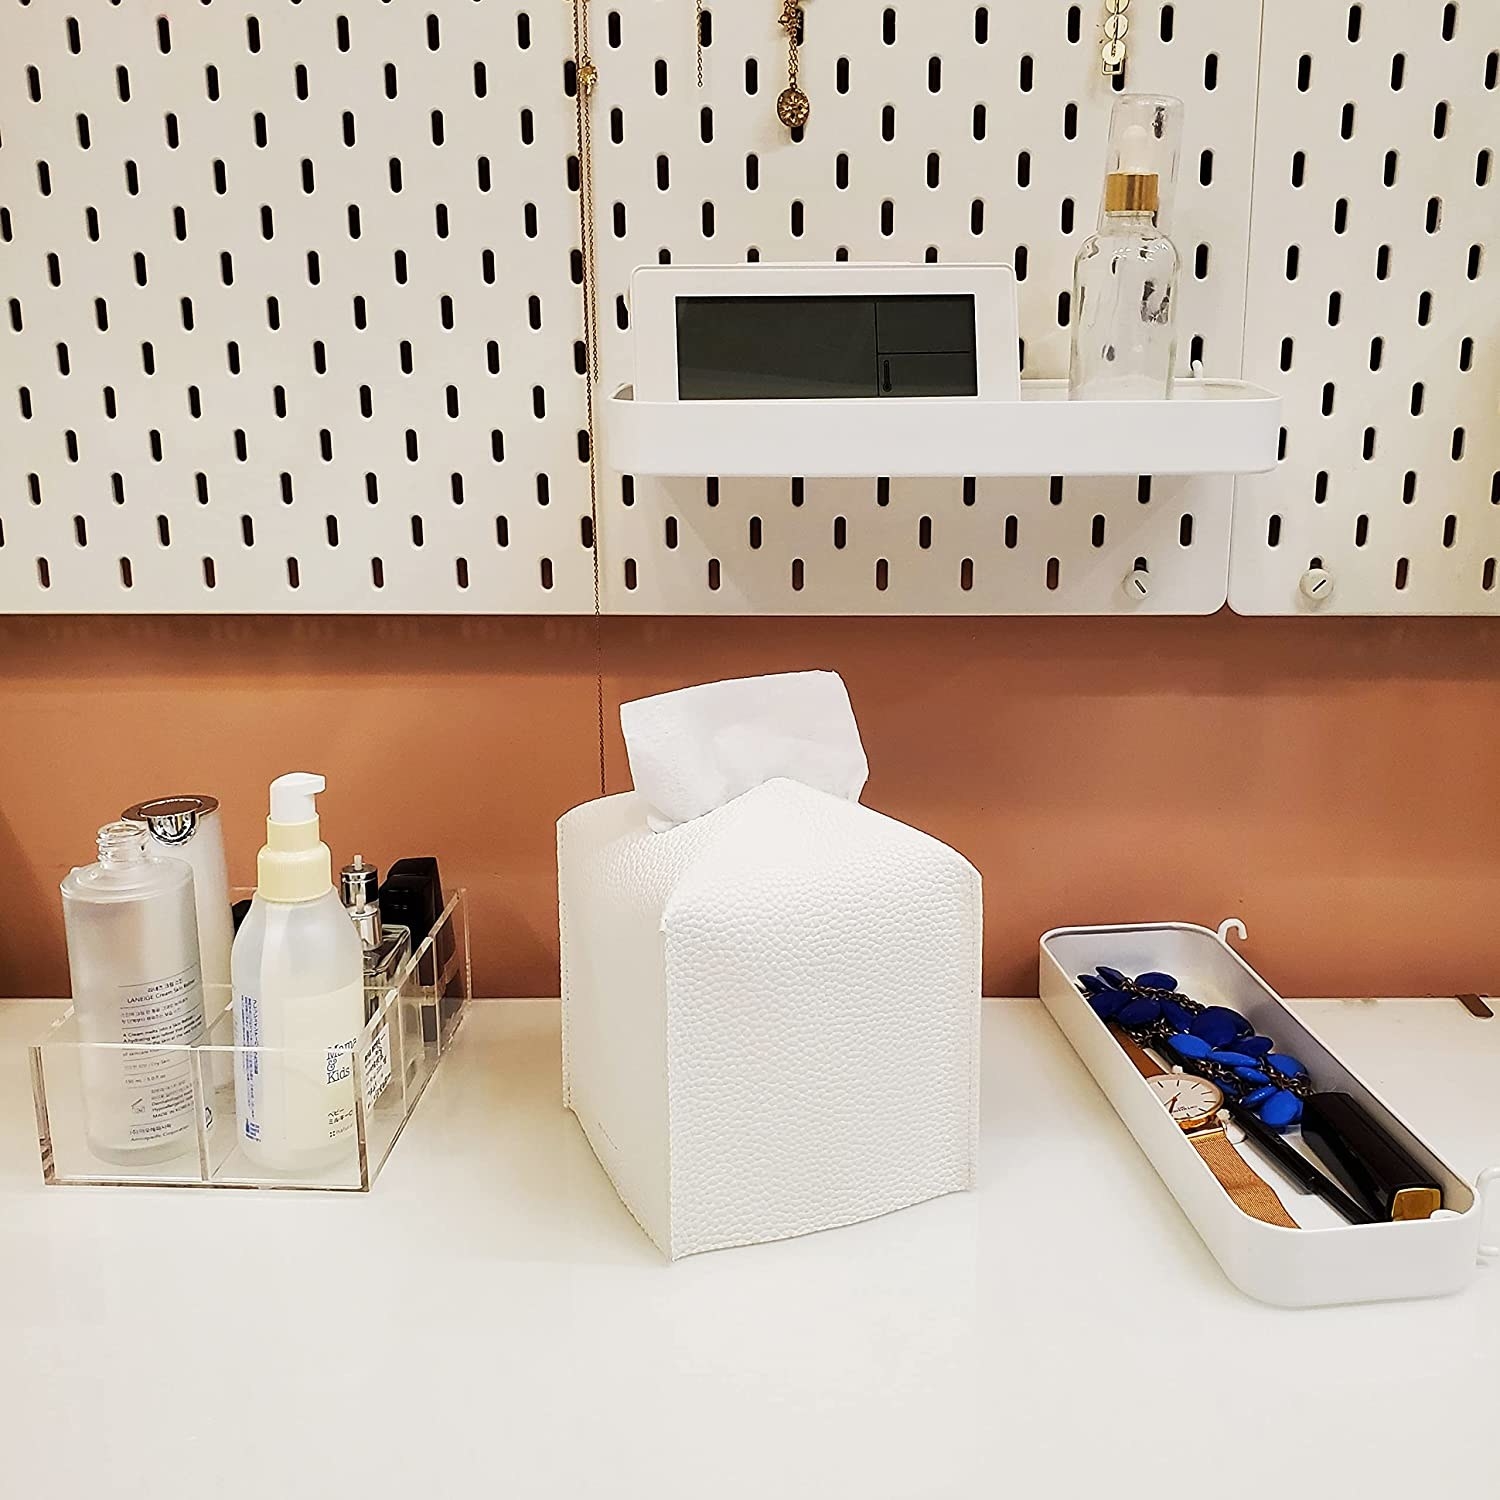 The white tissue box holder is shown